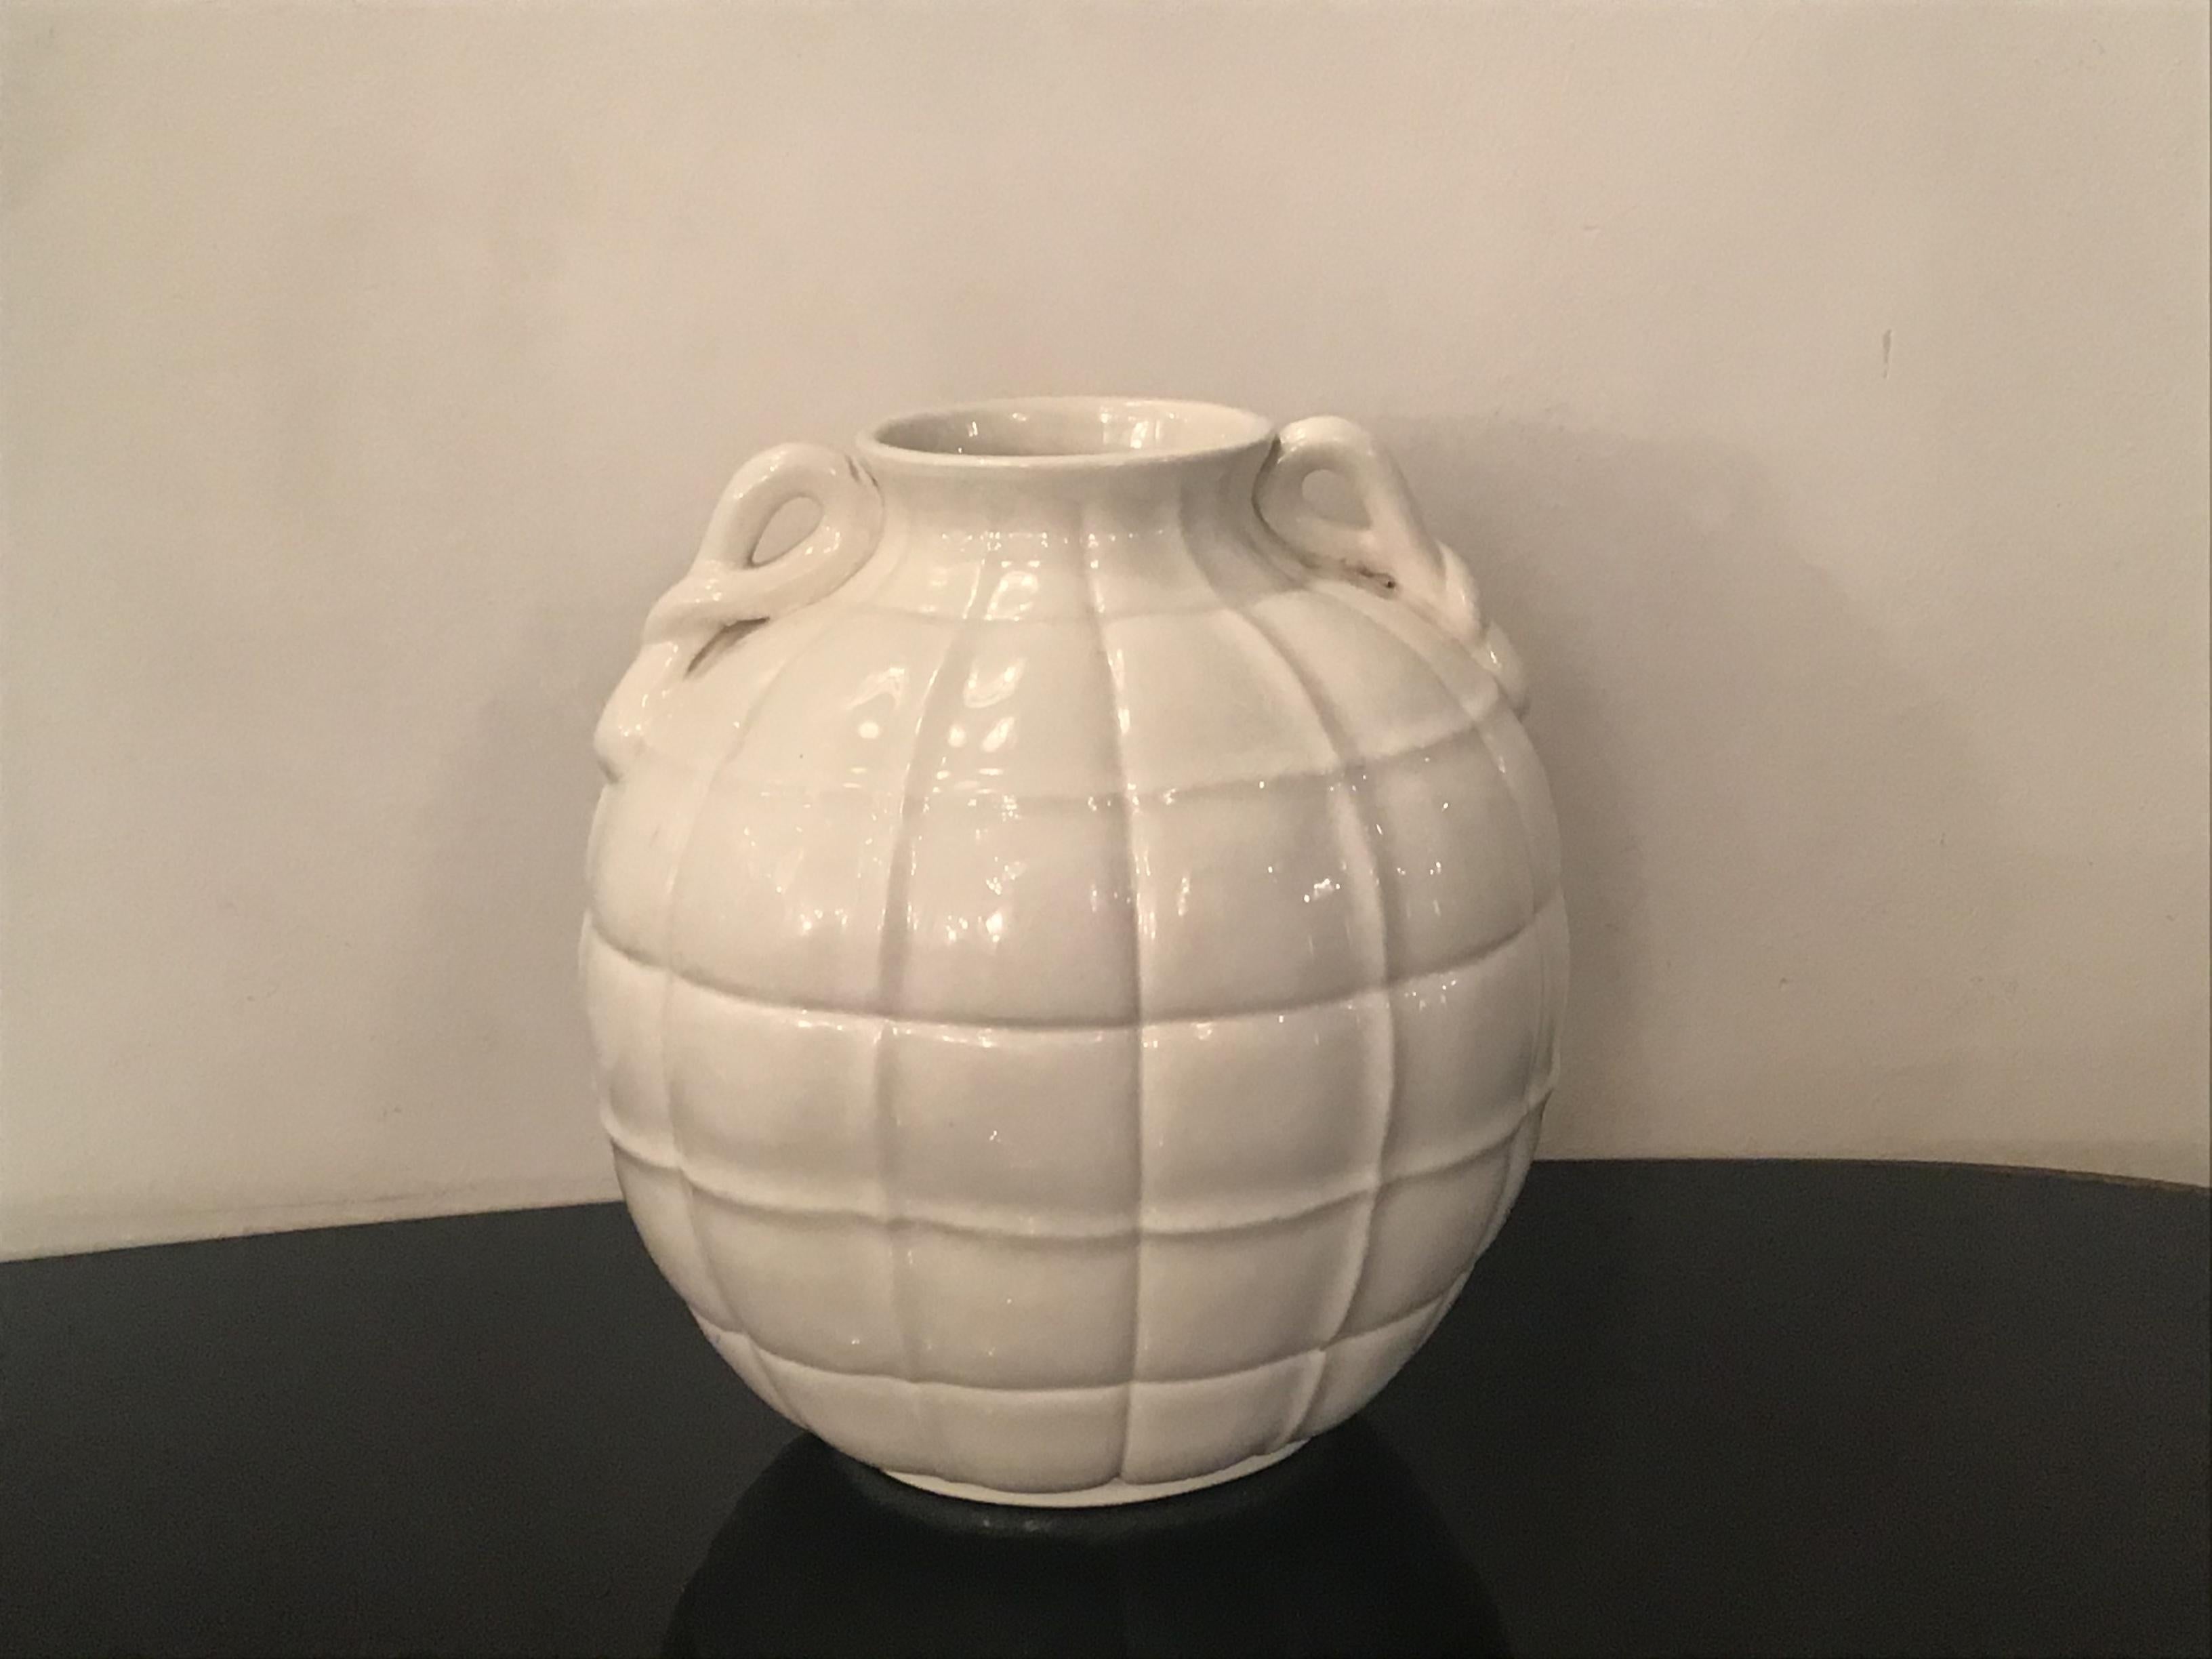 Gio’ Ponti vase ceramic 1929 Italy.
Mark . San Cristoforo - RICHARD GINORI - Made in Italy